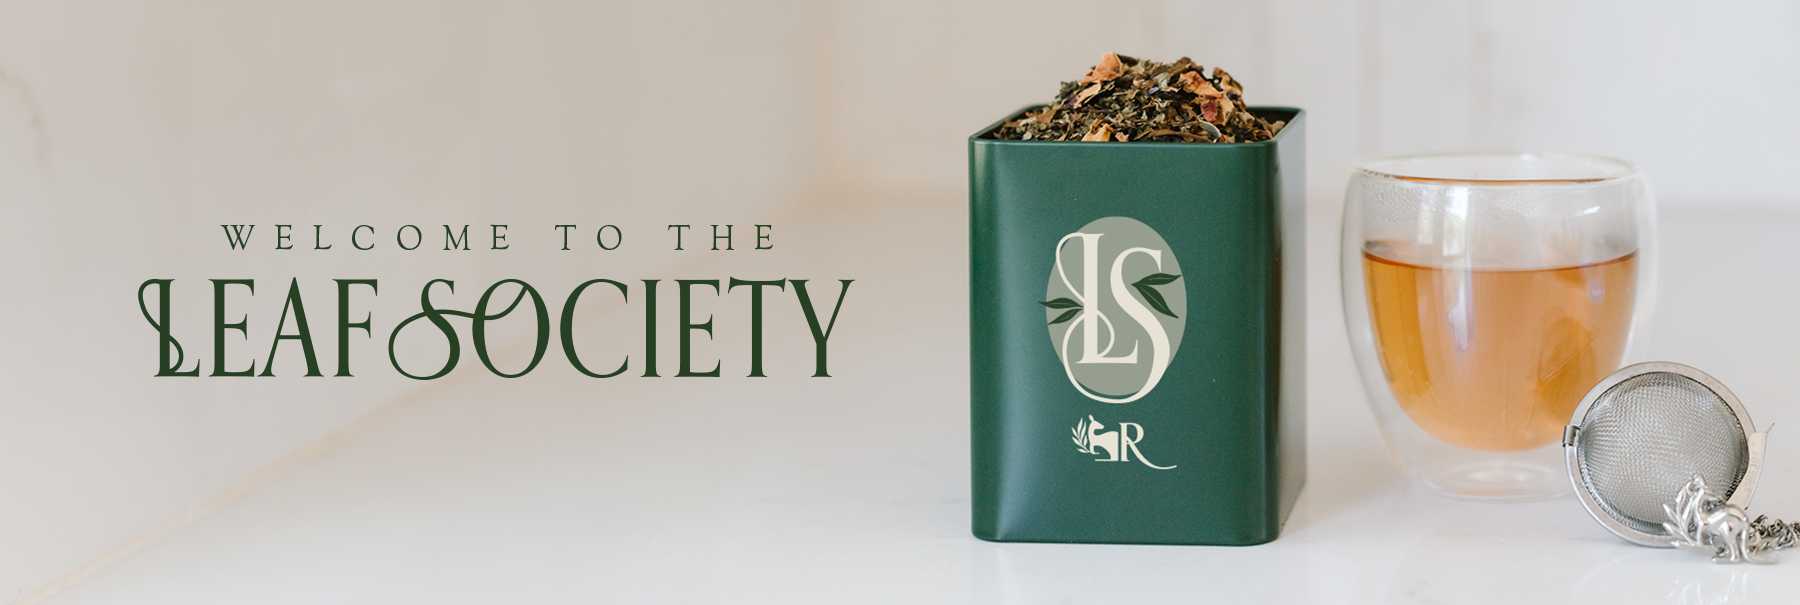 Leaf Society Banner Image